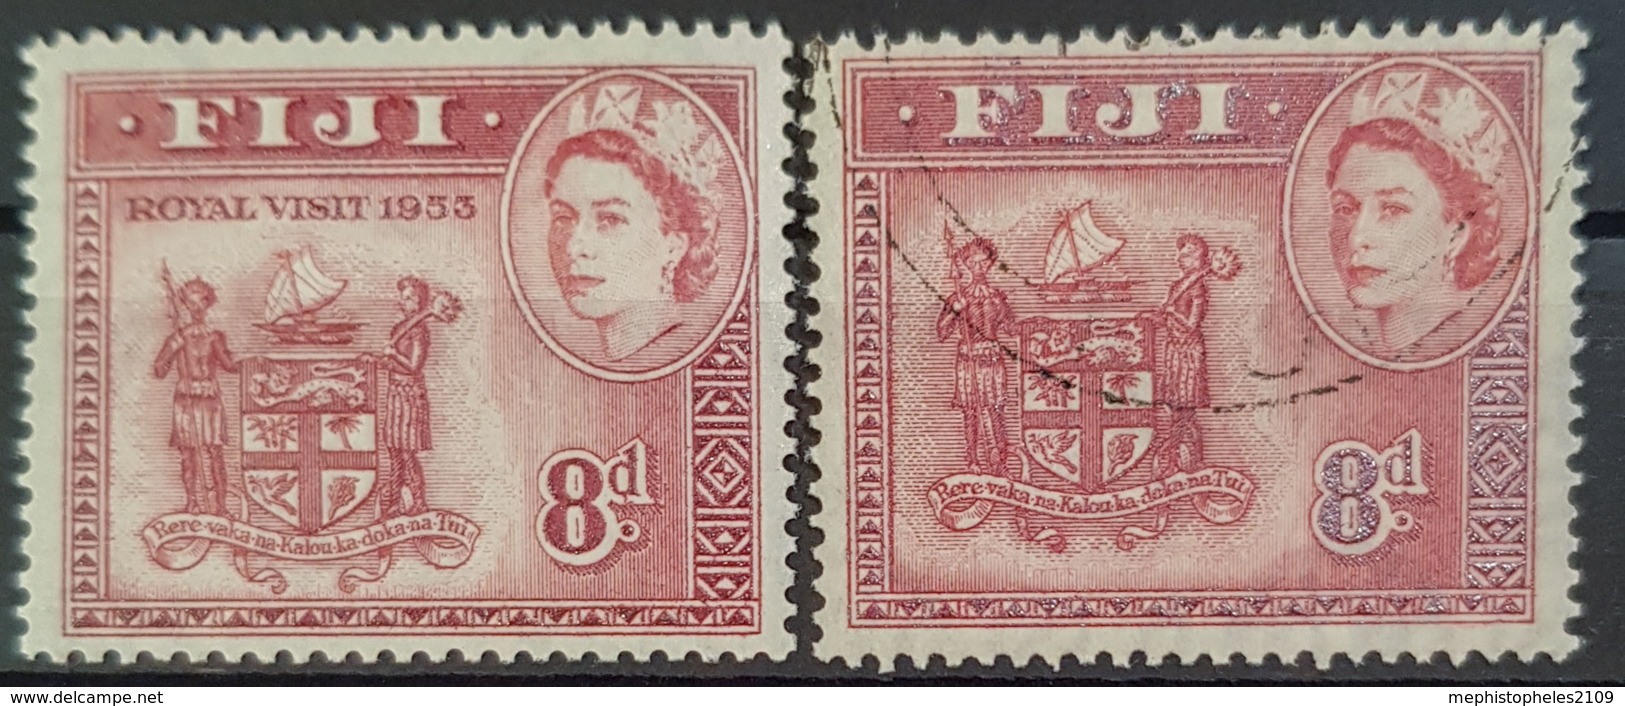 FIJI 1953 - MNH And Canceled - Sc#146 - Royal Visit 1953 - Fidji (...-1970)